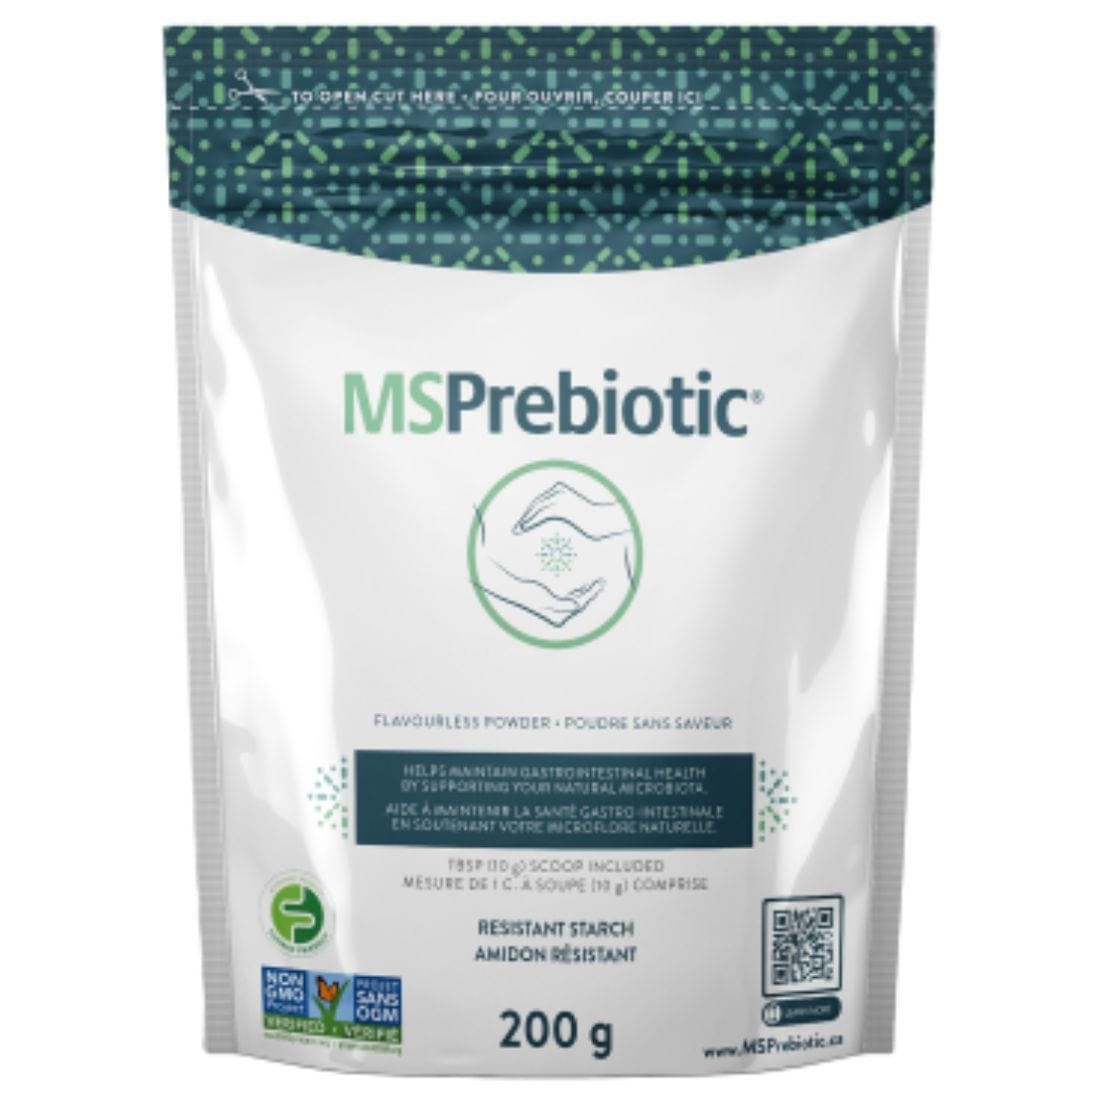 MSPrebiotic Powder (FODMAP Friendly, Vegan and Ketogenic Friendly Resistant Starch)